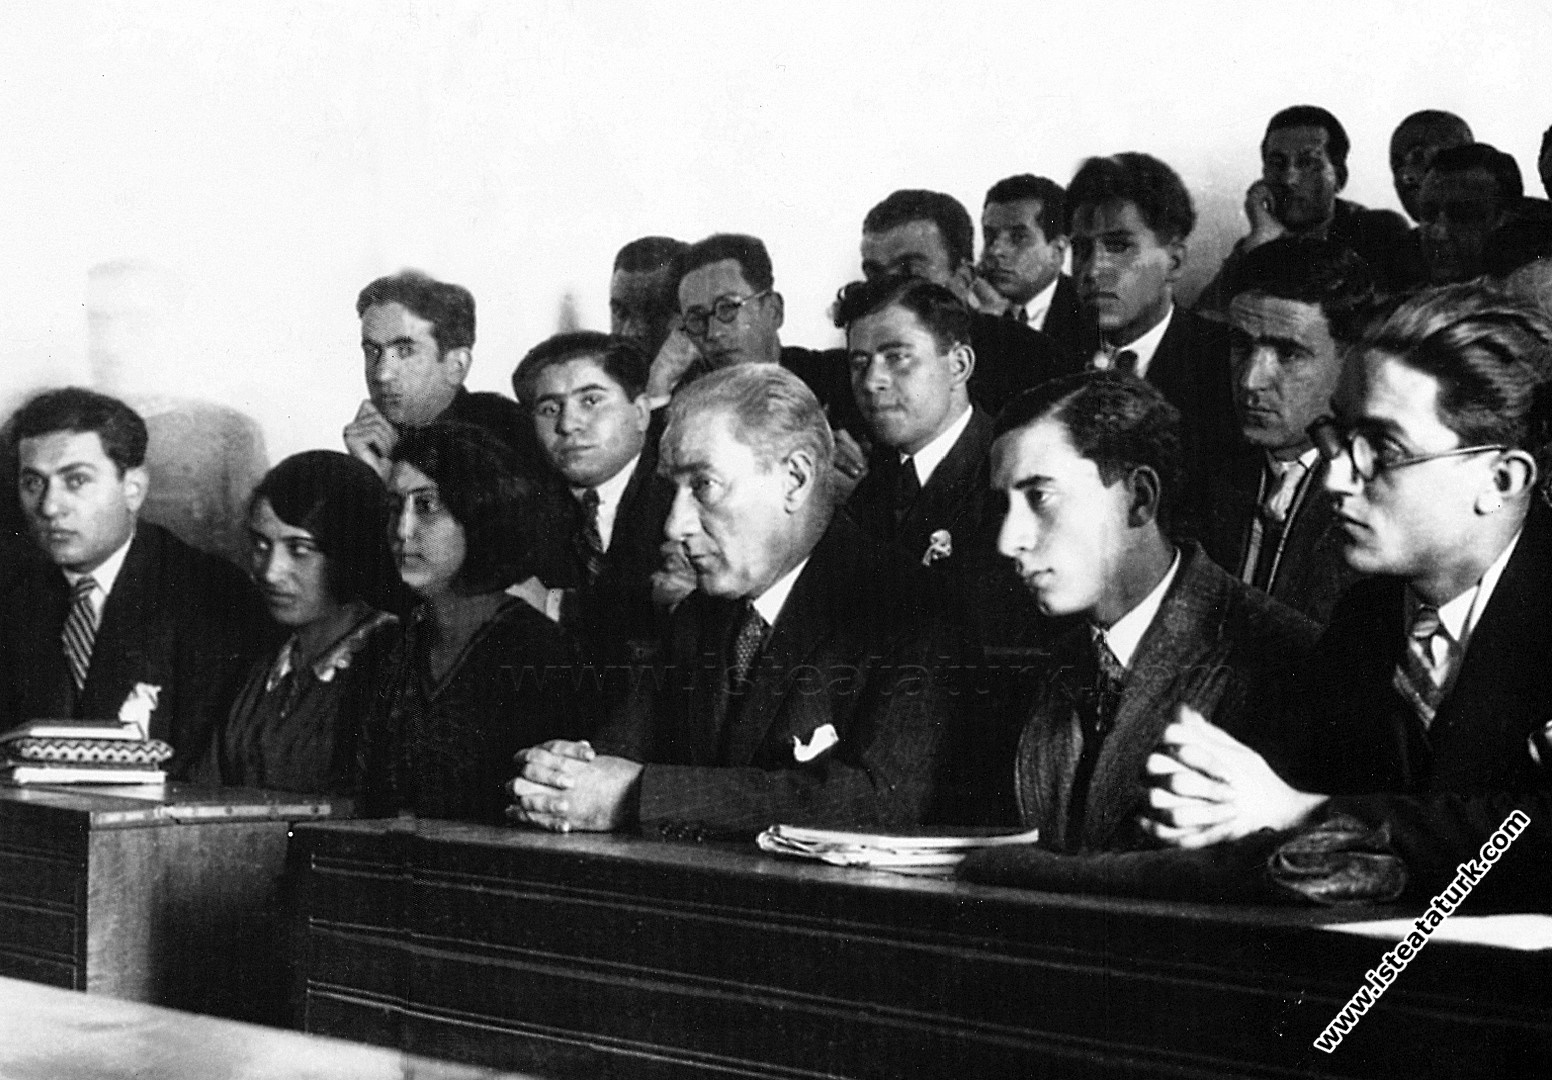 Atatürk's Perspective on Education and Universities